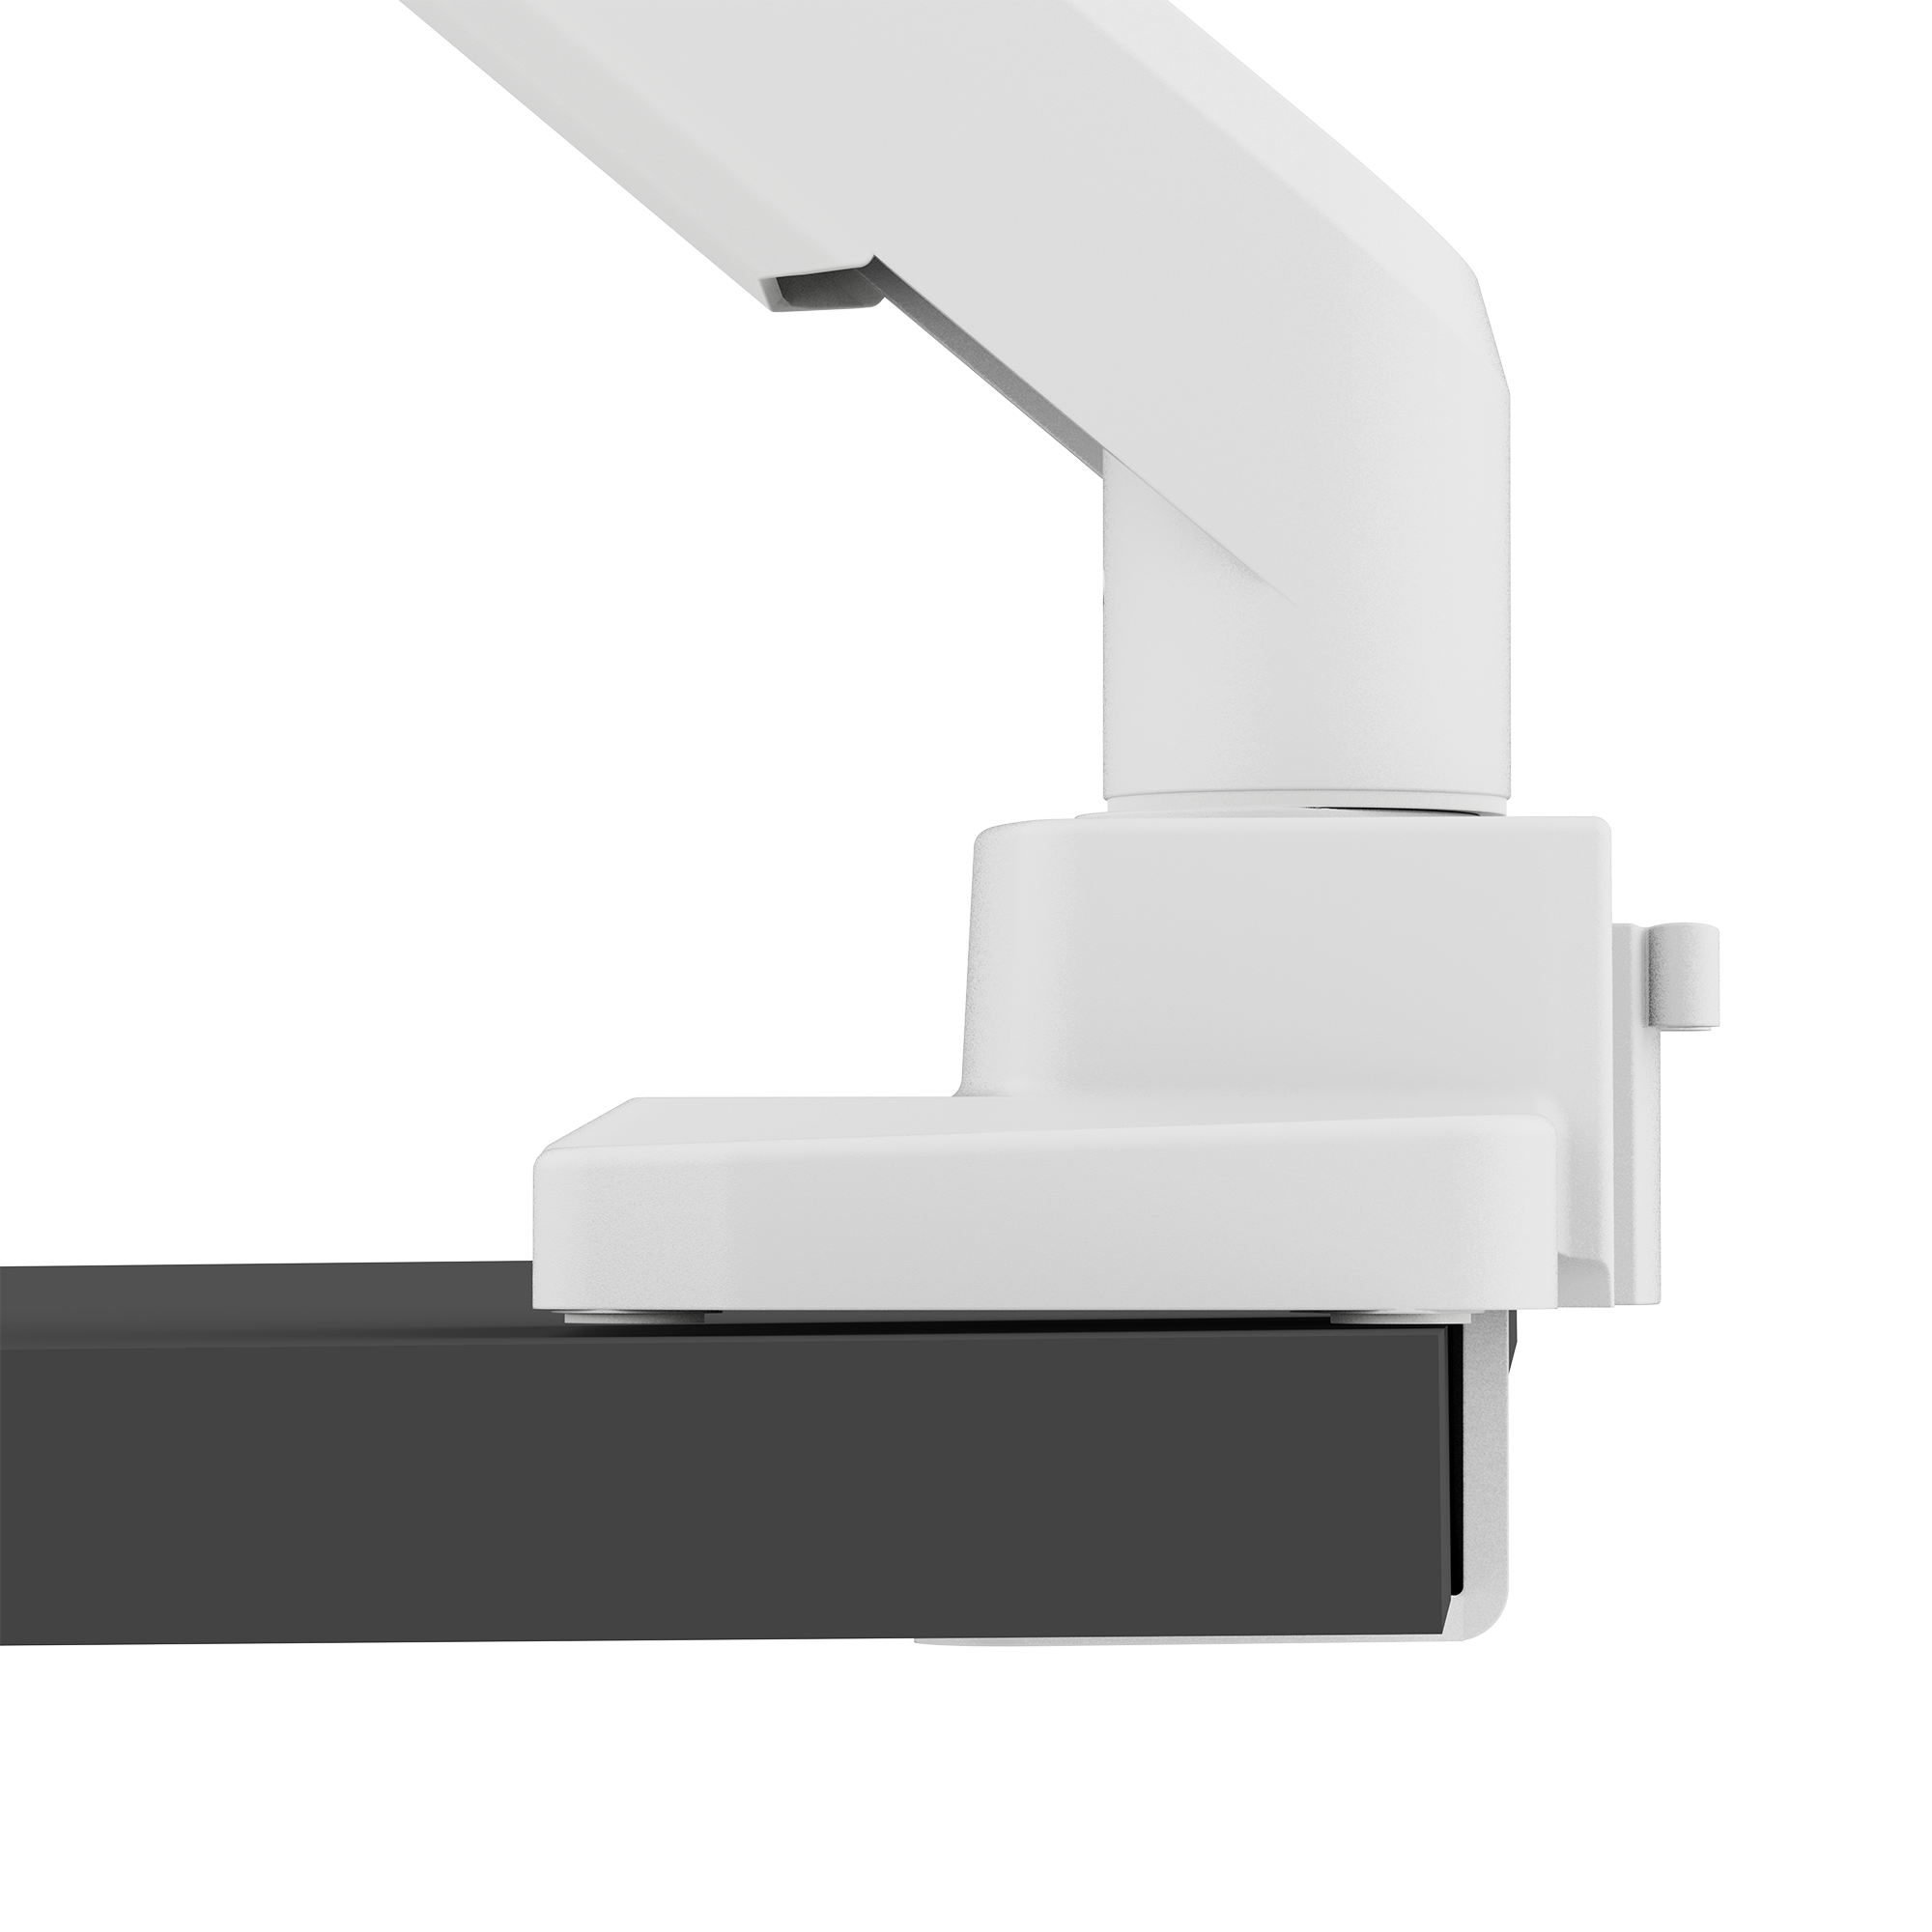 PS2S White Heavy-Duty Single Monitor Arm Mount